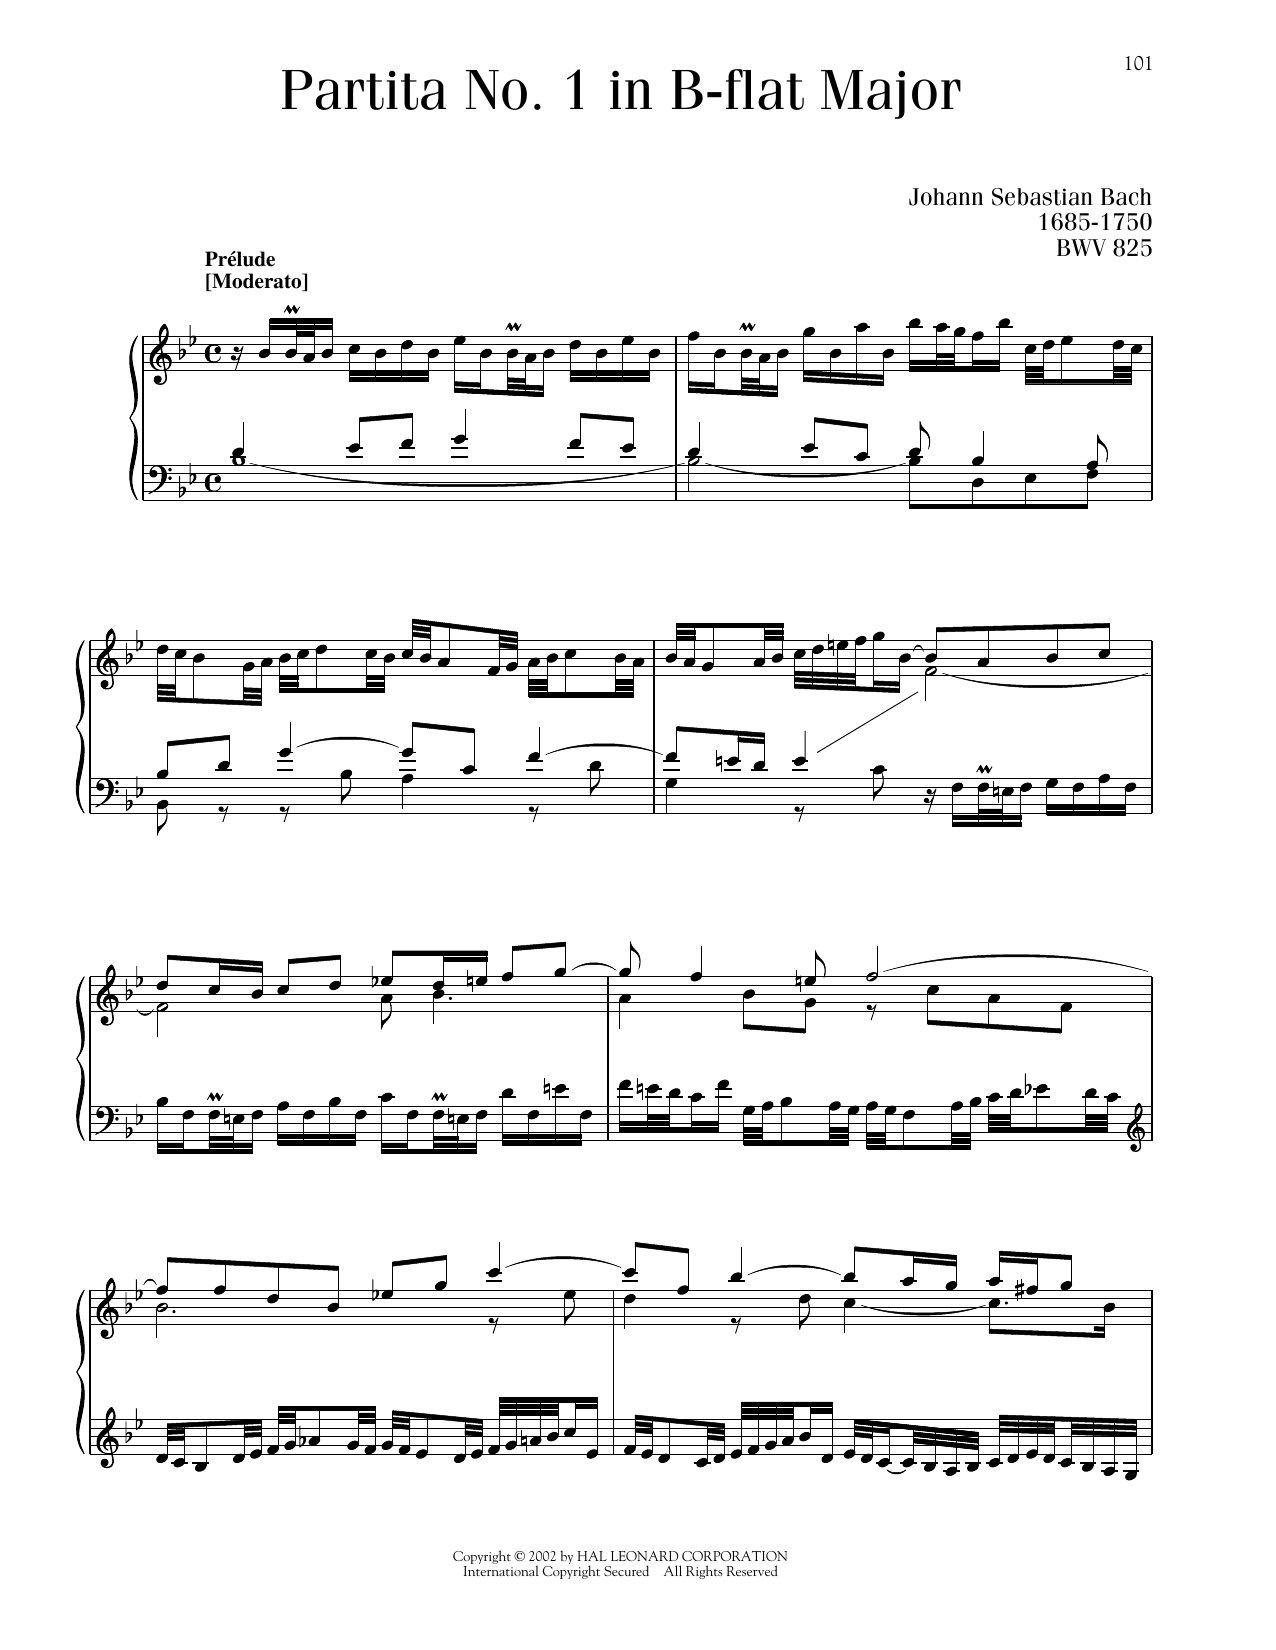 Johann Sebastian Bach Partita No. 1 In B-Flat Major, BWV 825 sheet music notes and chords arranged for Piano Solo